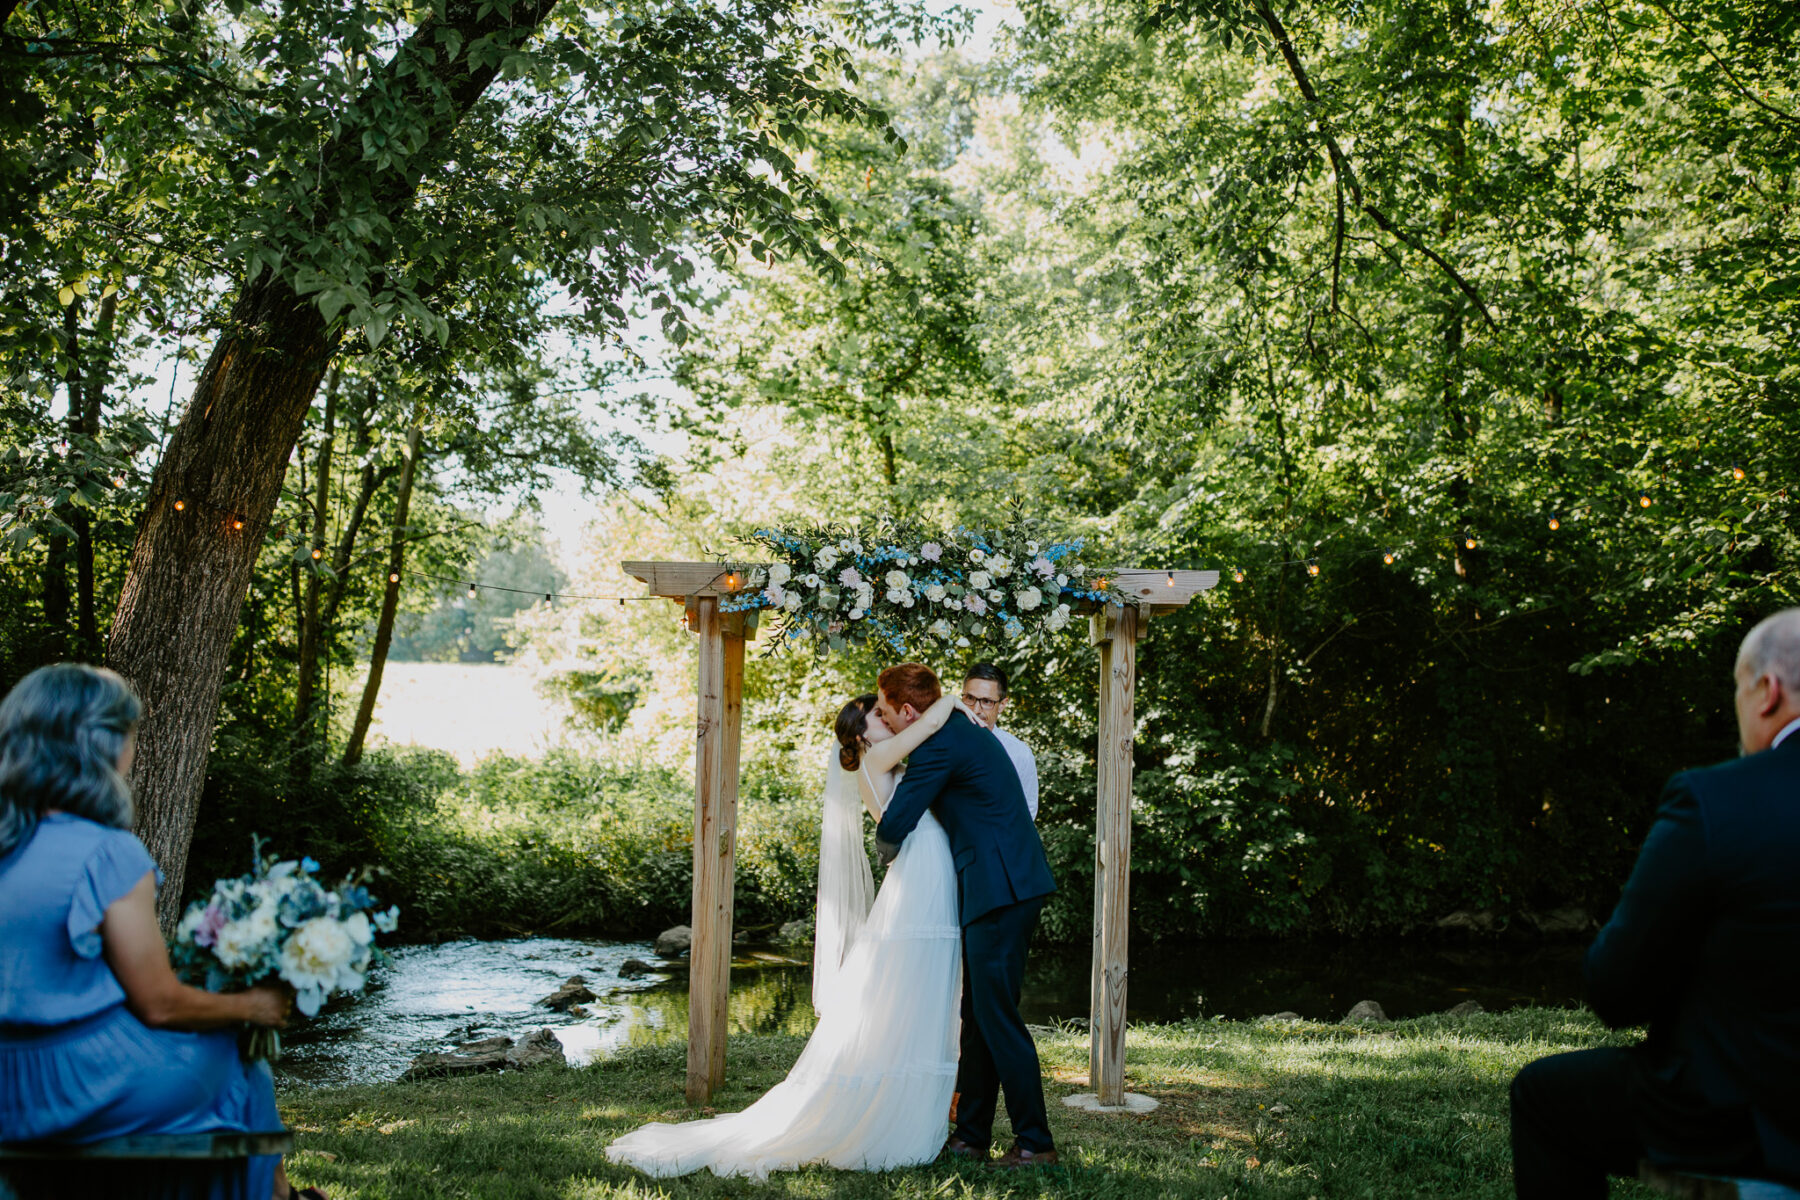 Summer wedding: Vibrant Summer Wedding at Sinking Creek Farm featured on Nashville Bride Guide